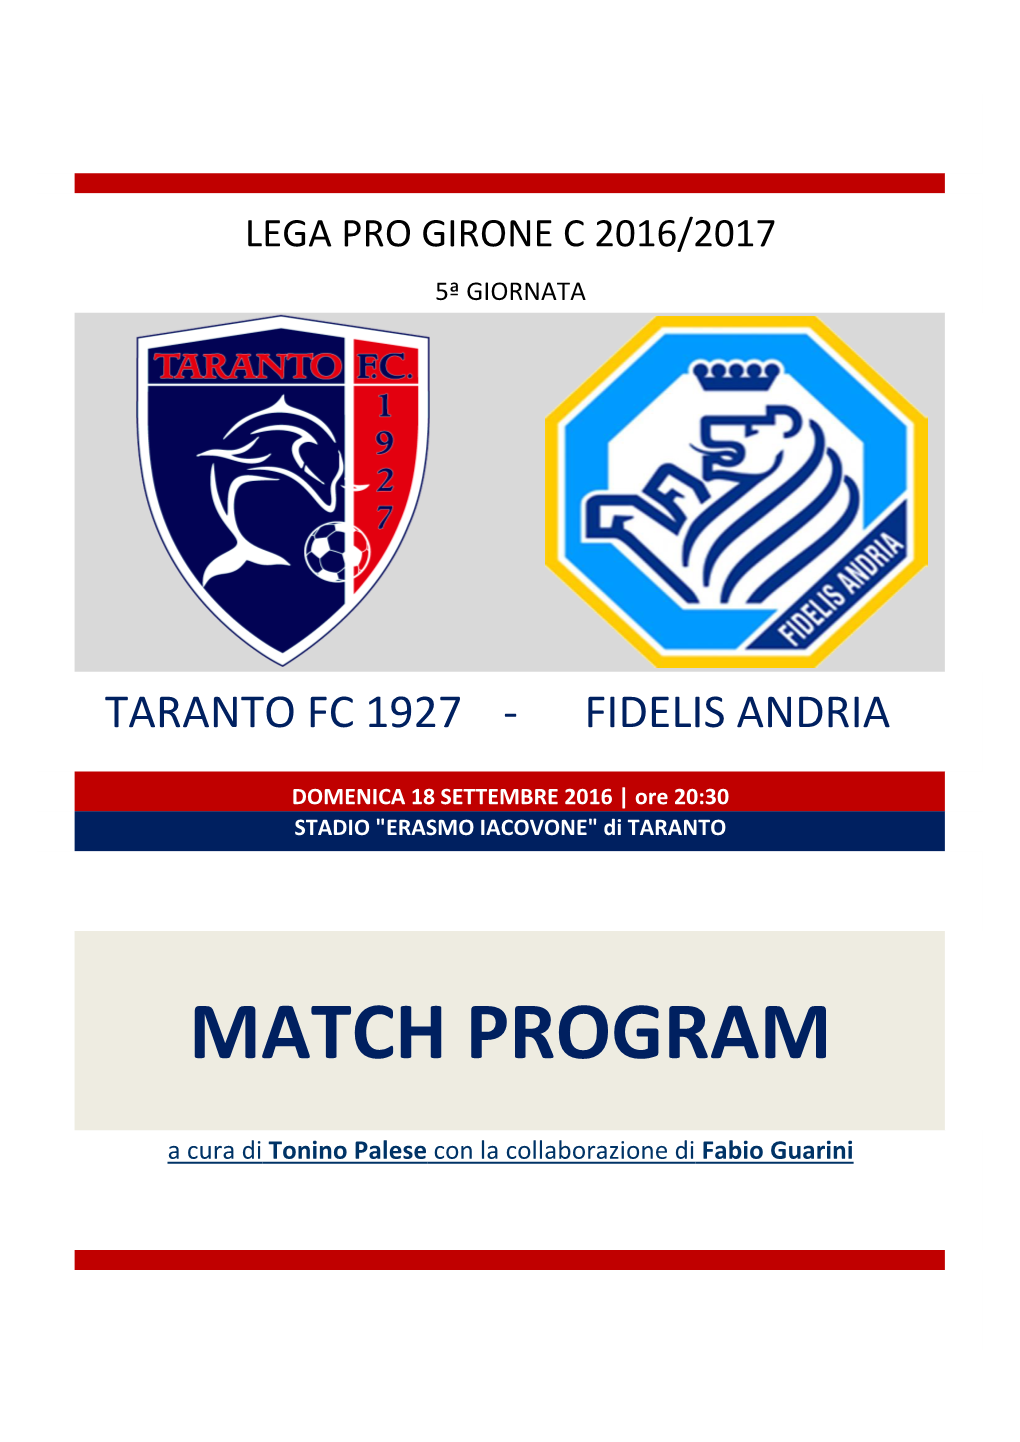 Match Program